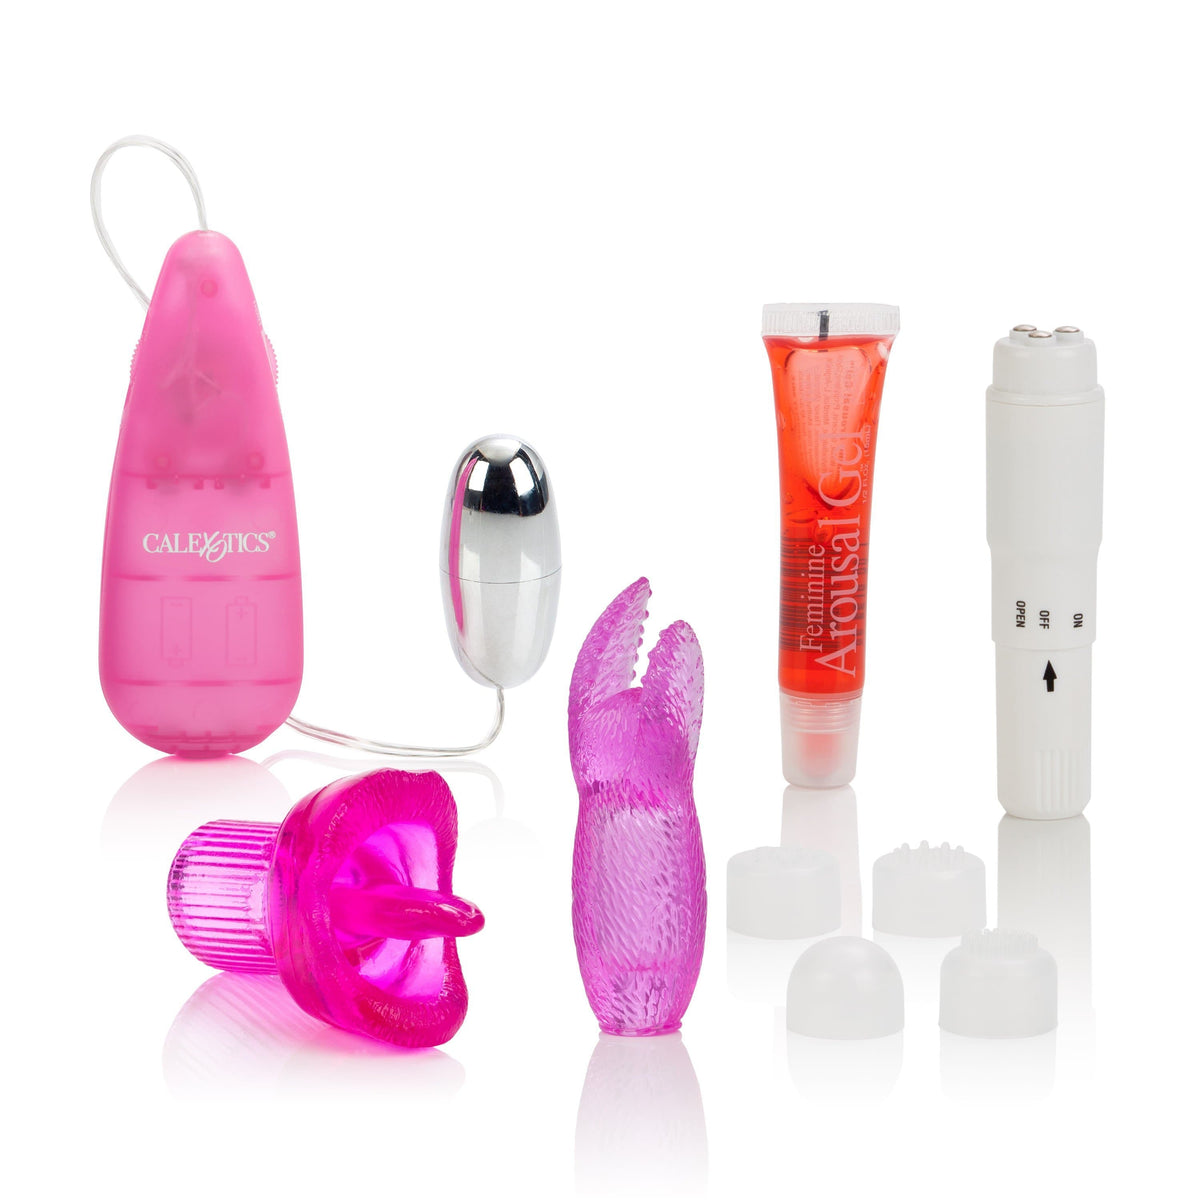 California Exotics - Hers Clit Massagers Kit (Pink) CE1596 CherryAffairs